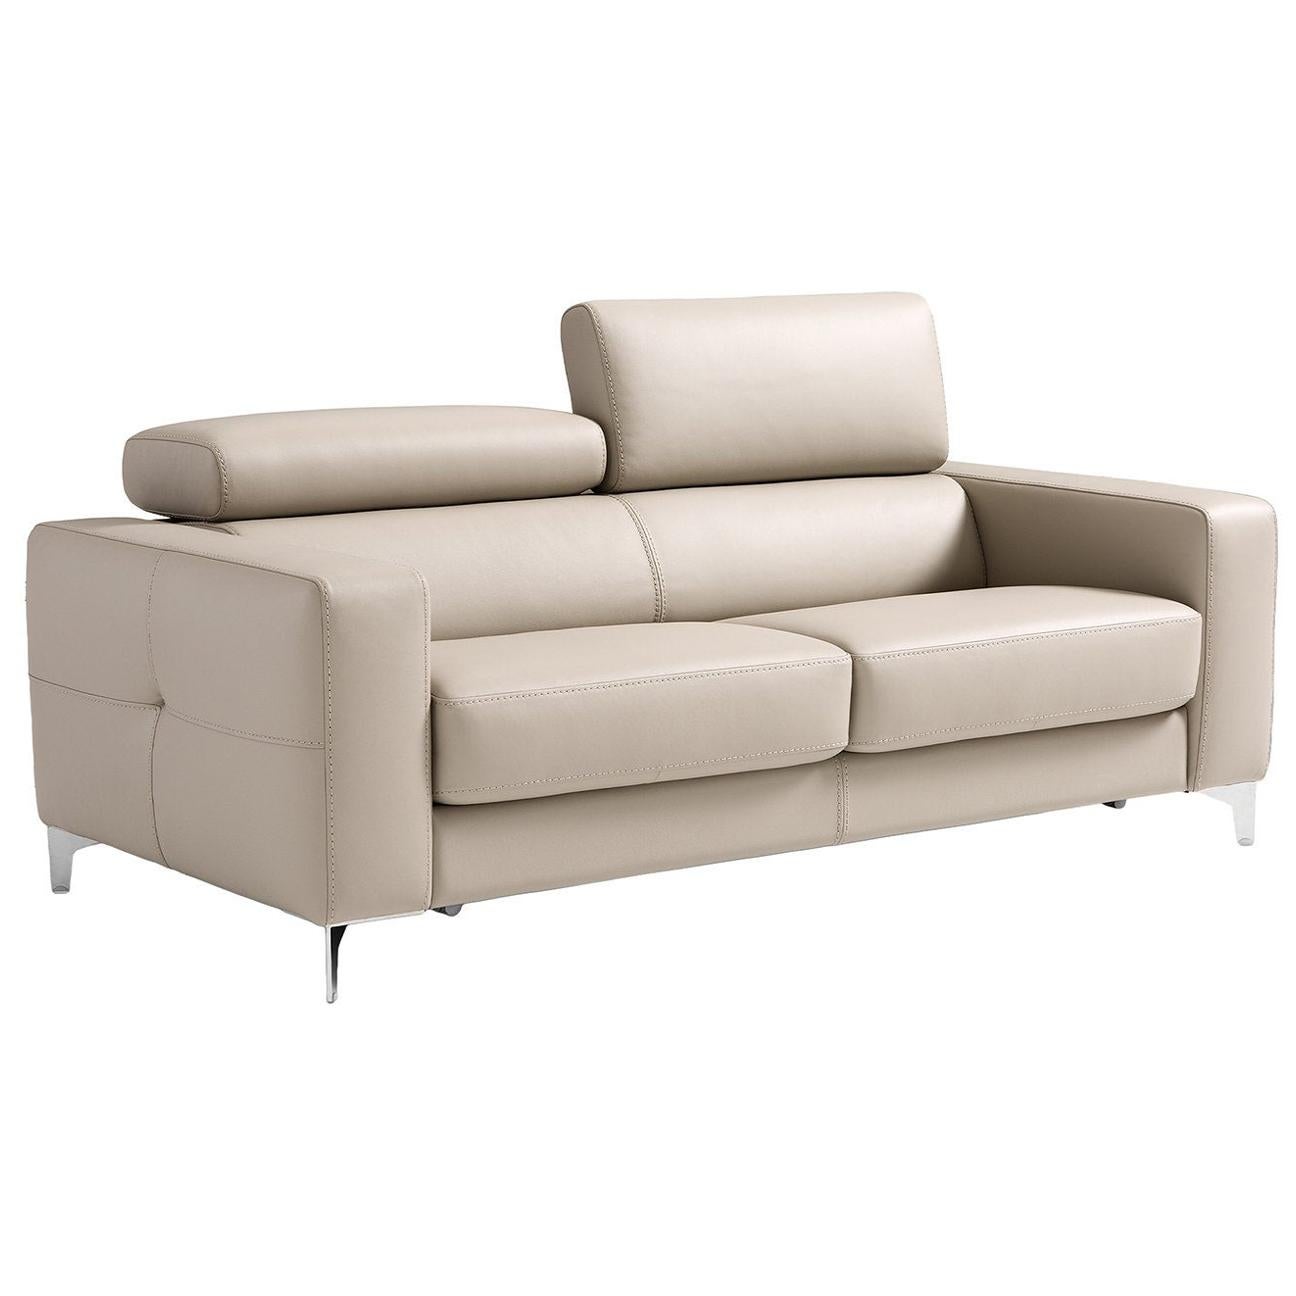 Verona Beige Leather 2-Seater Sofa Bed